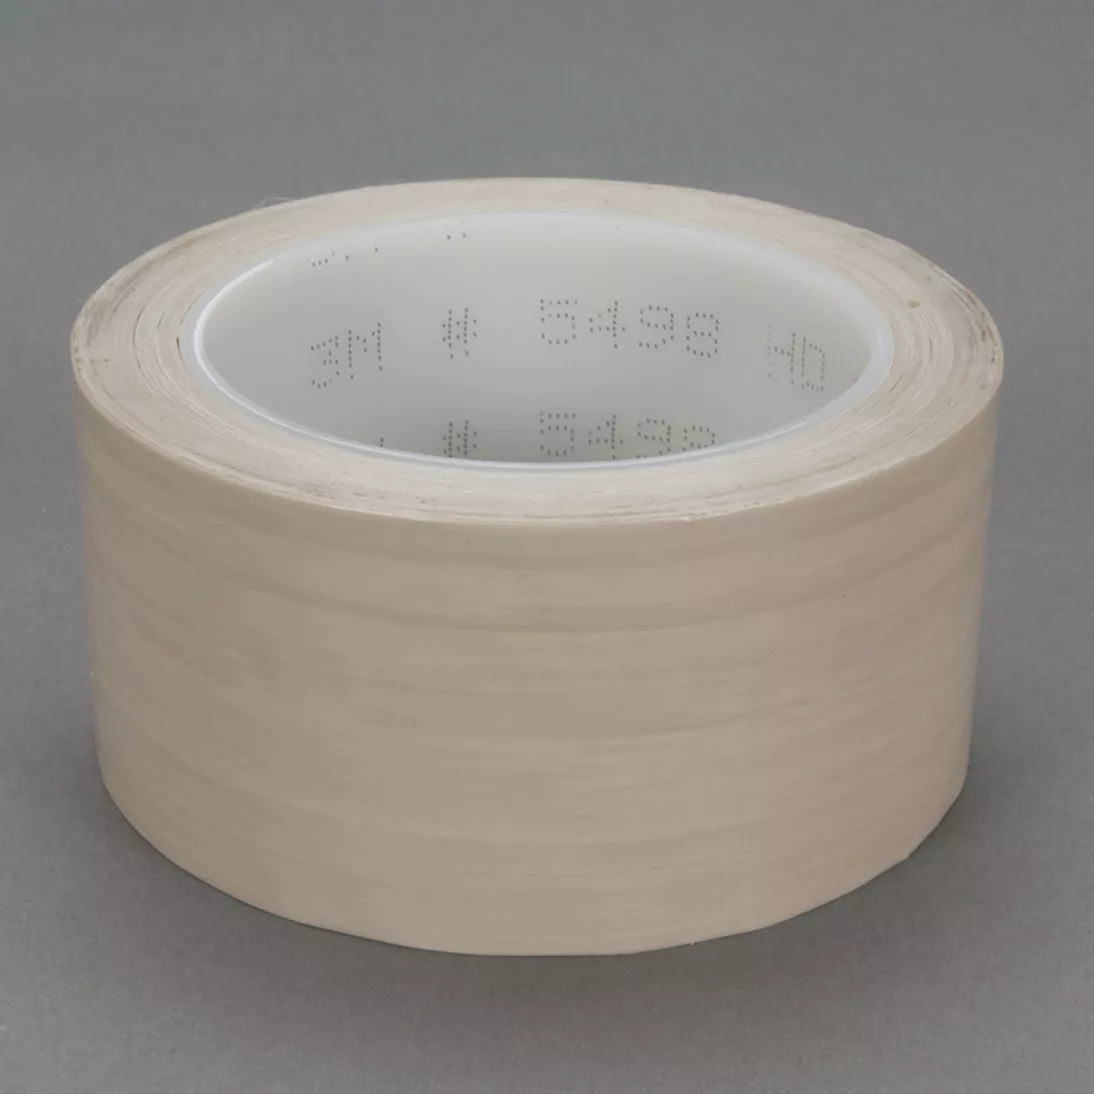 3M™ PTFE Film Tape 5498, Beige, 3 in x 36 yd, 4.2 mil, 12 rolls per case